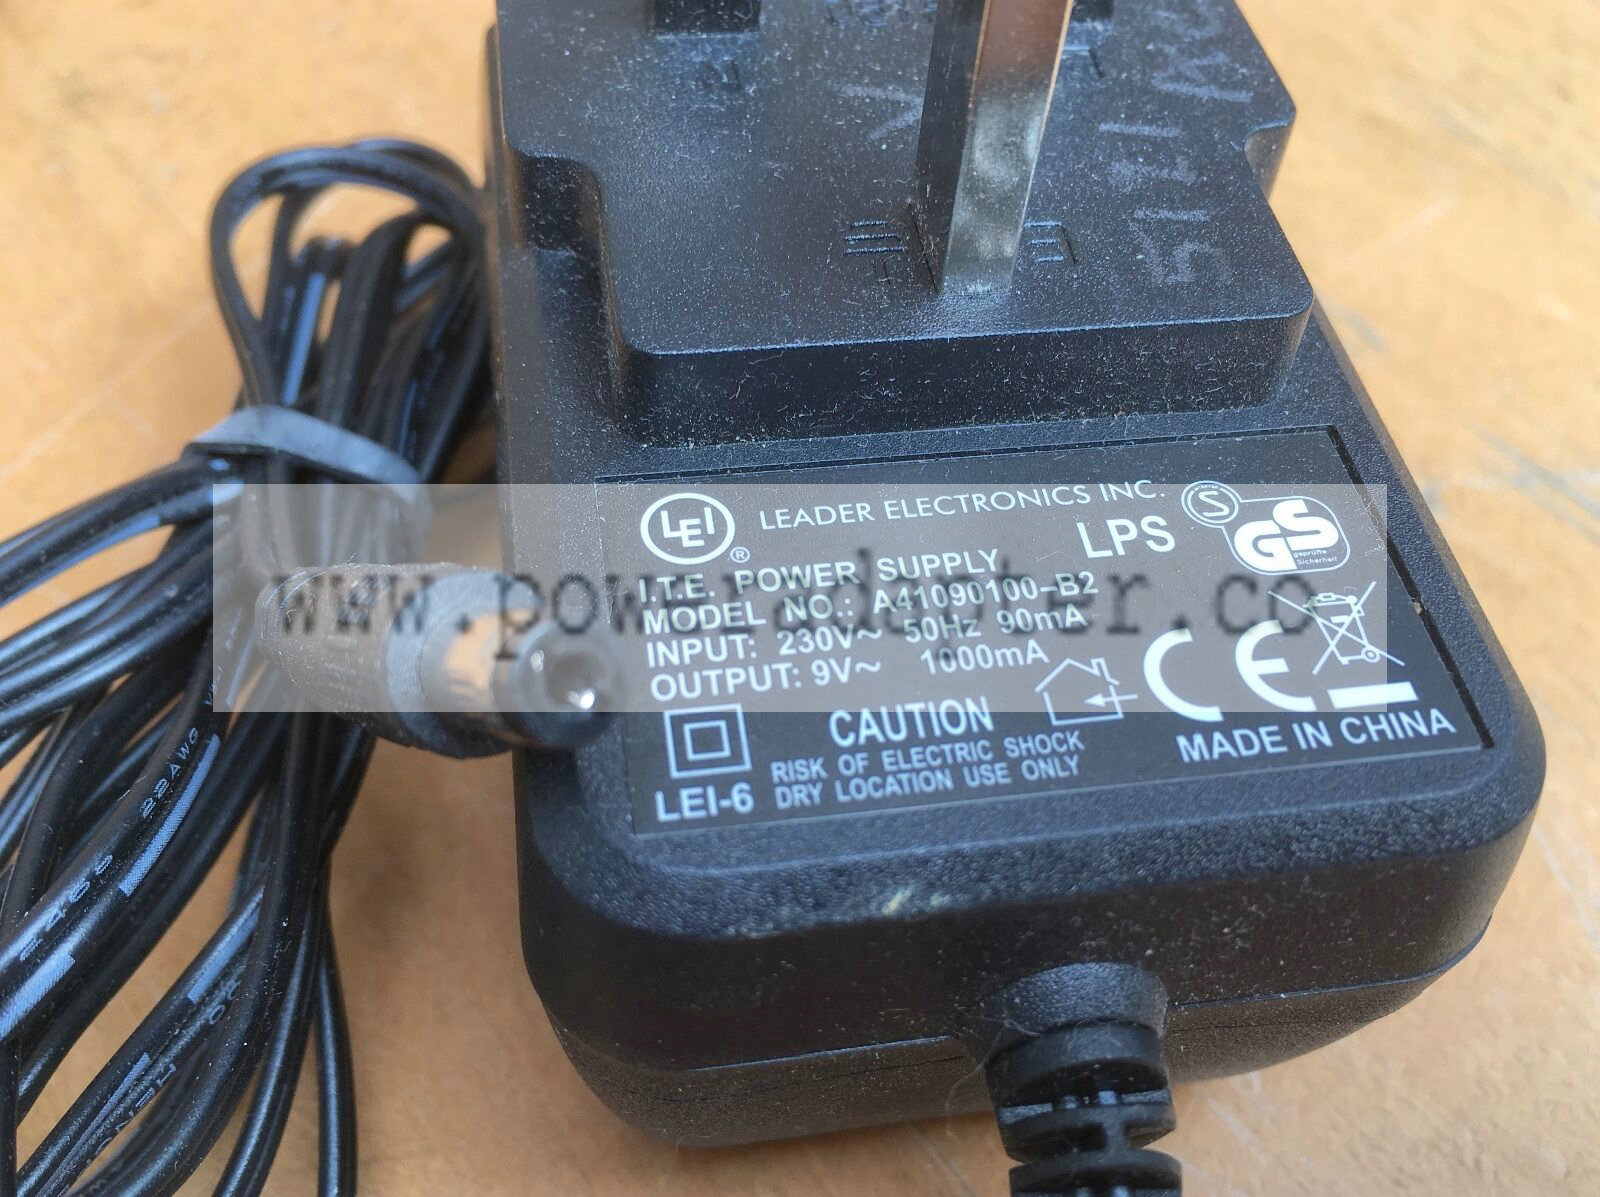 LEI A41090100-B2 9V AC 1A AC/AC Adaptor PSU Power Supply mains adaptor LEI A41090100-B2 AC 9V 1A AC/AC Adaptor - 5m - Click Image to Close